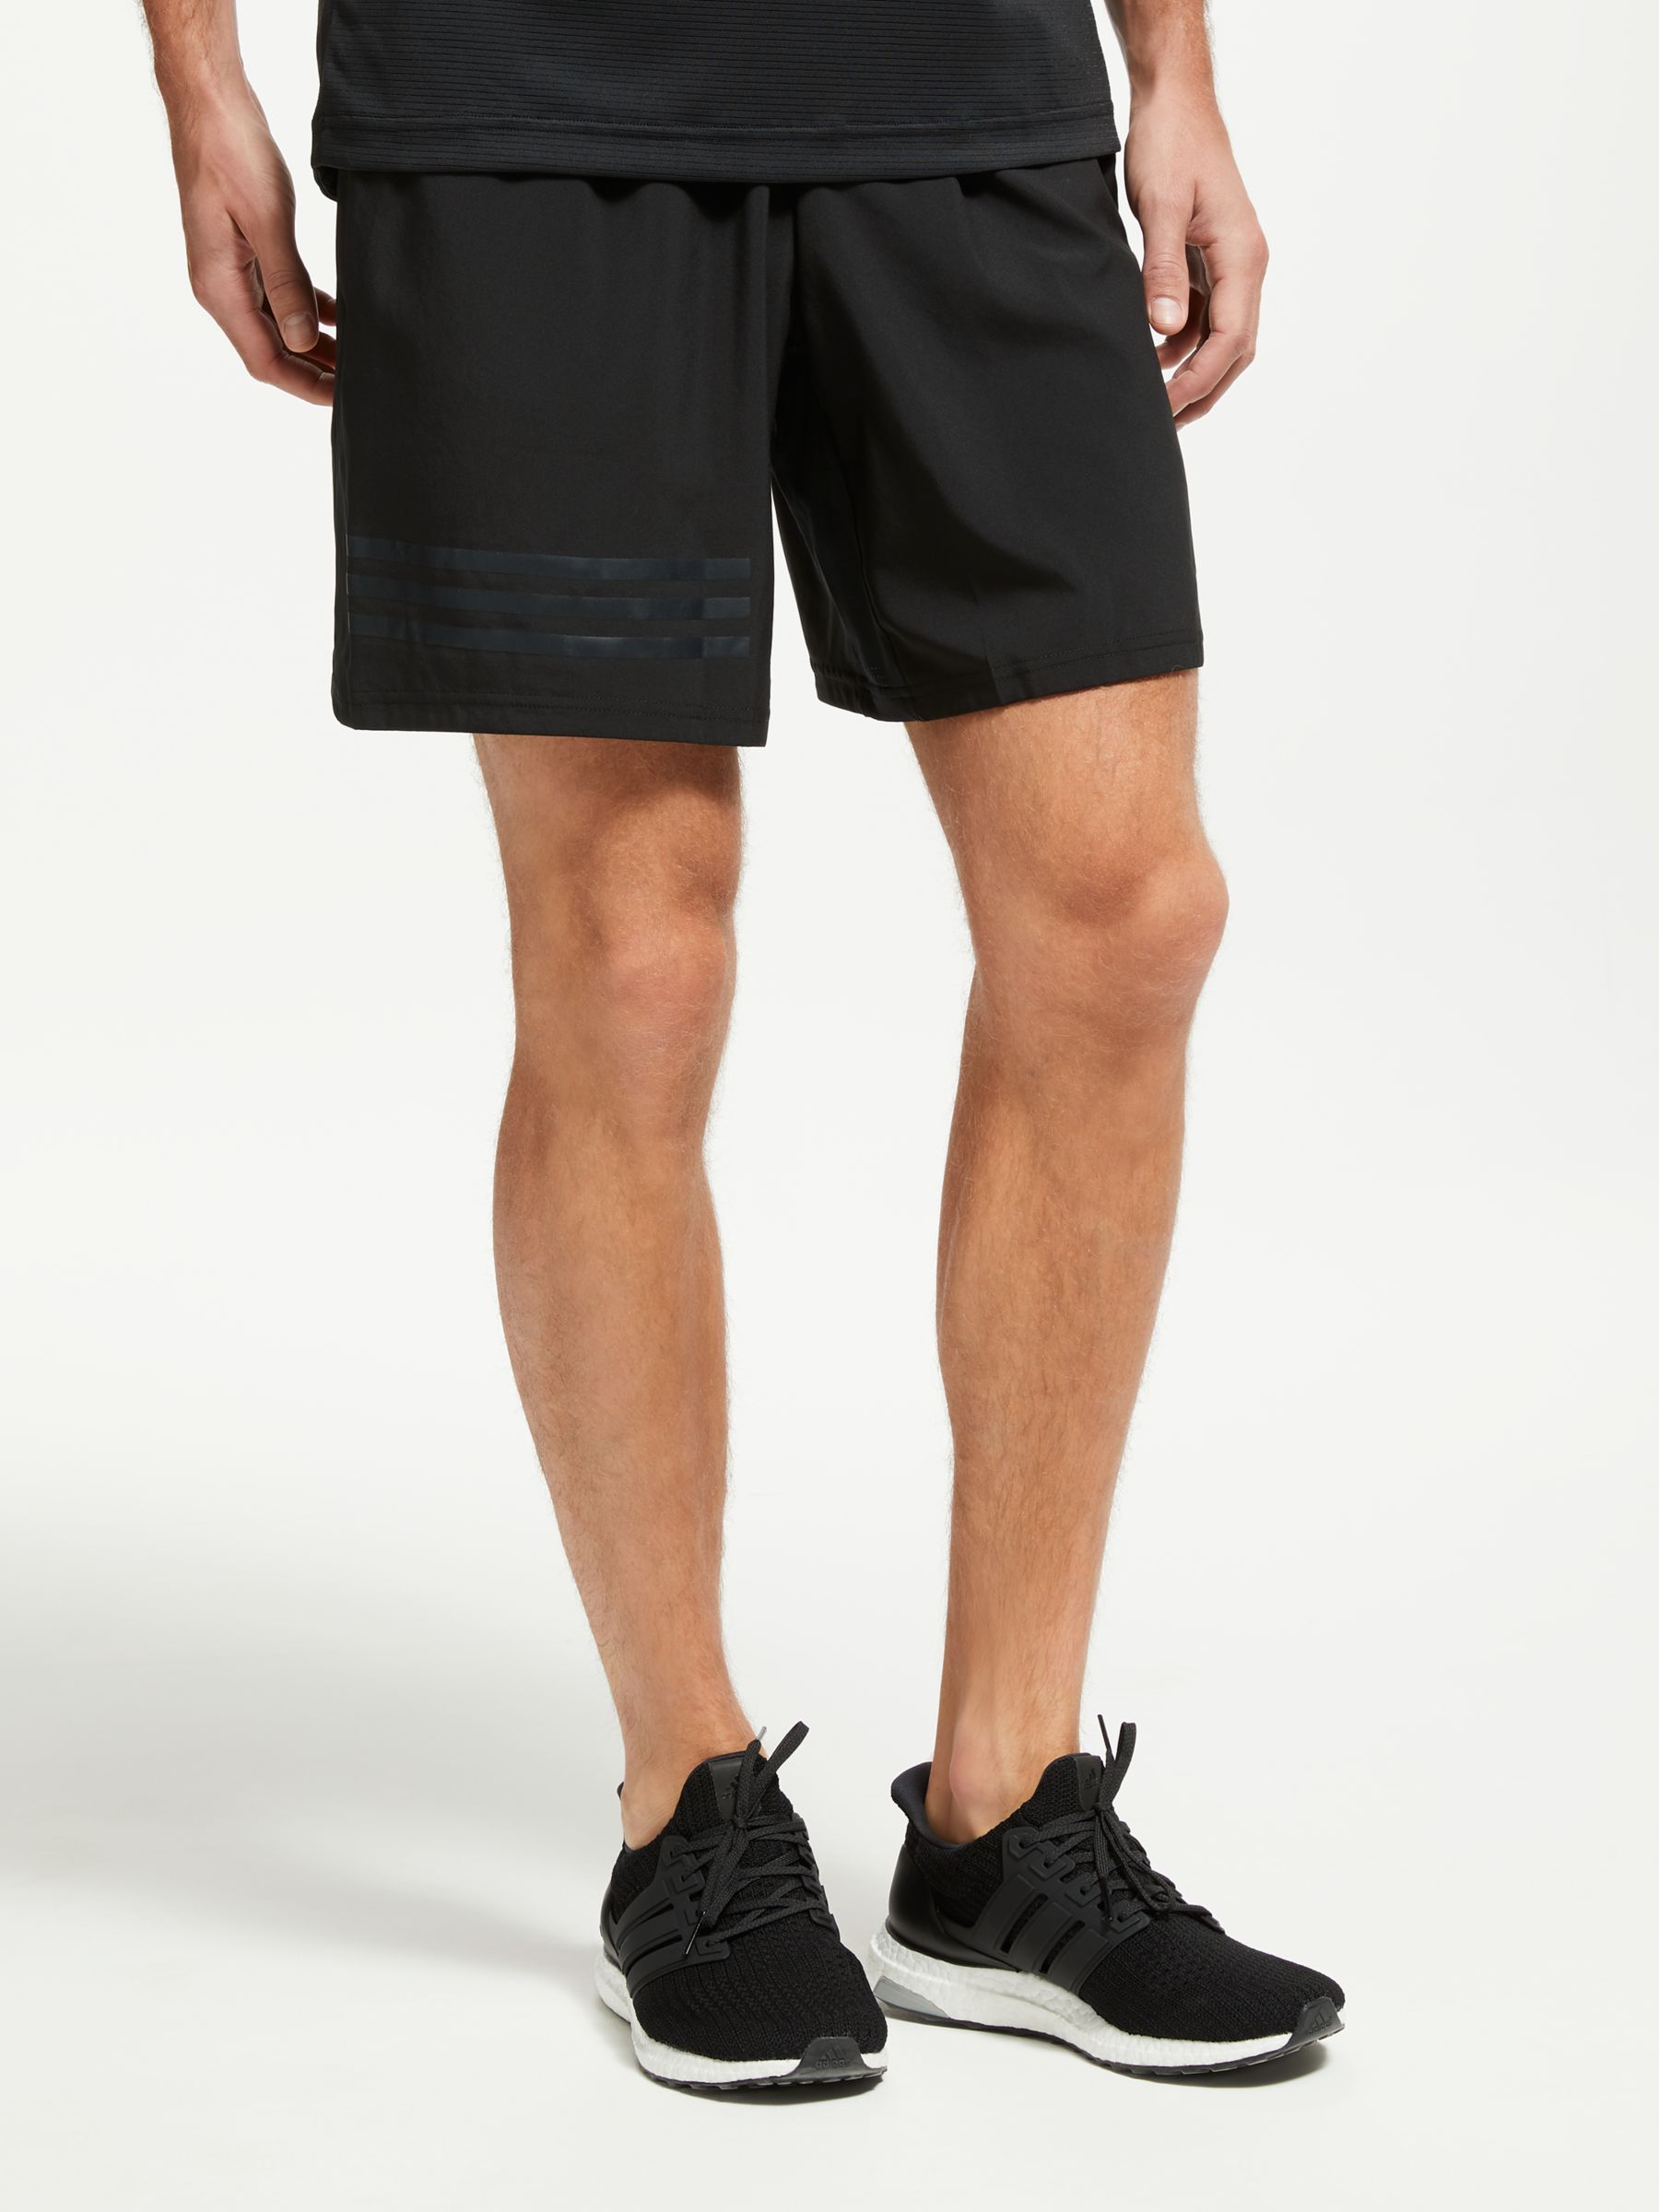 adidas 4KRFT Climacool Training Shorts, Black